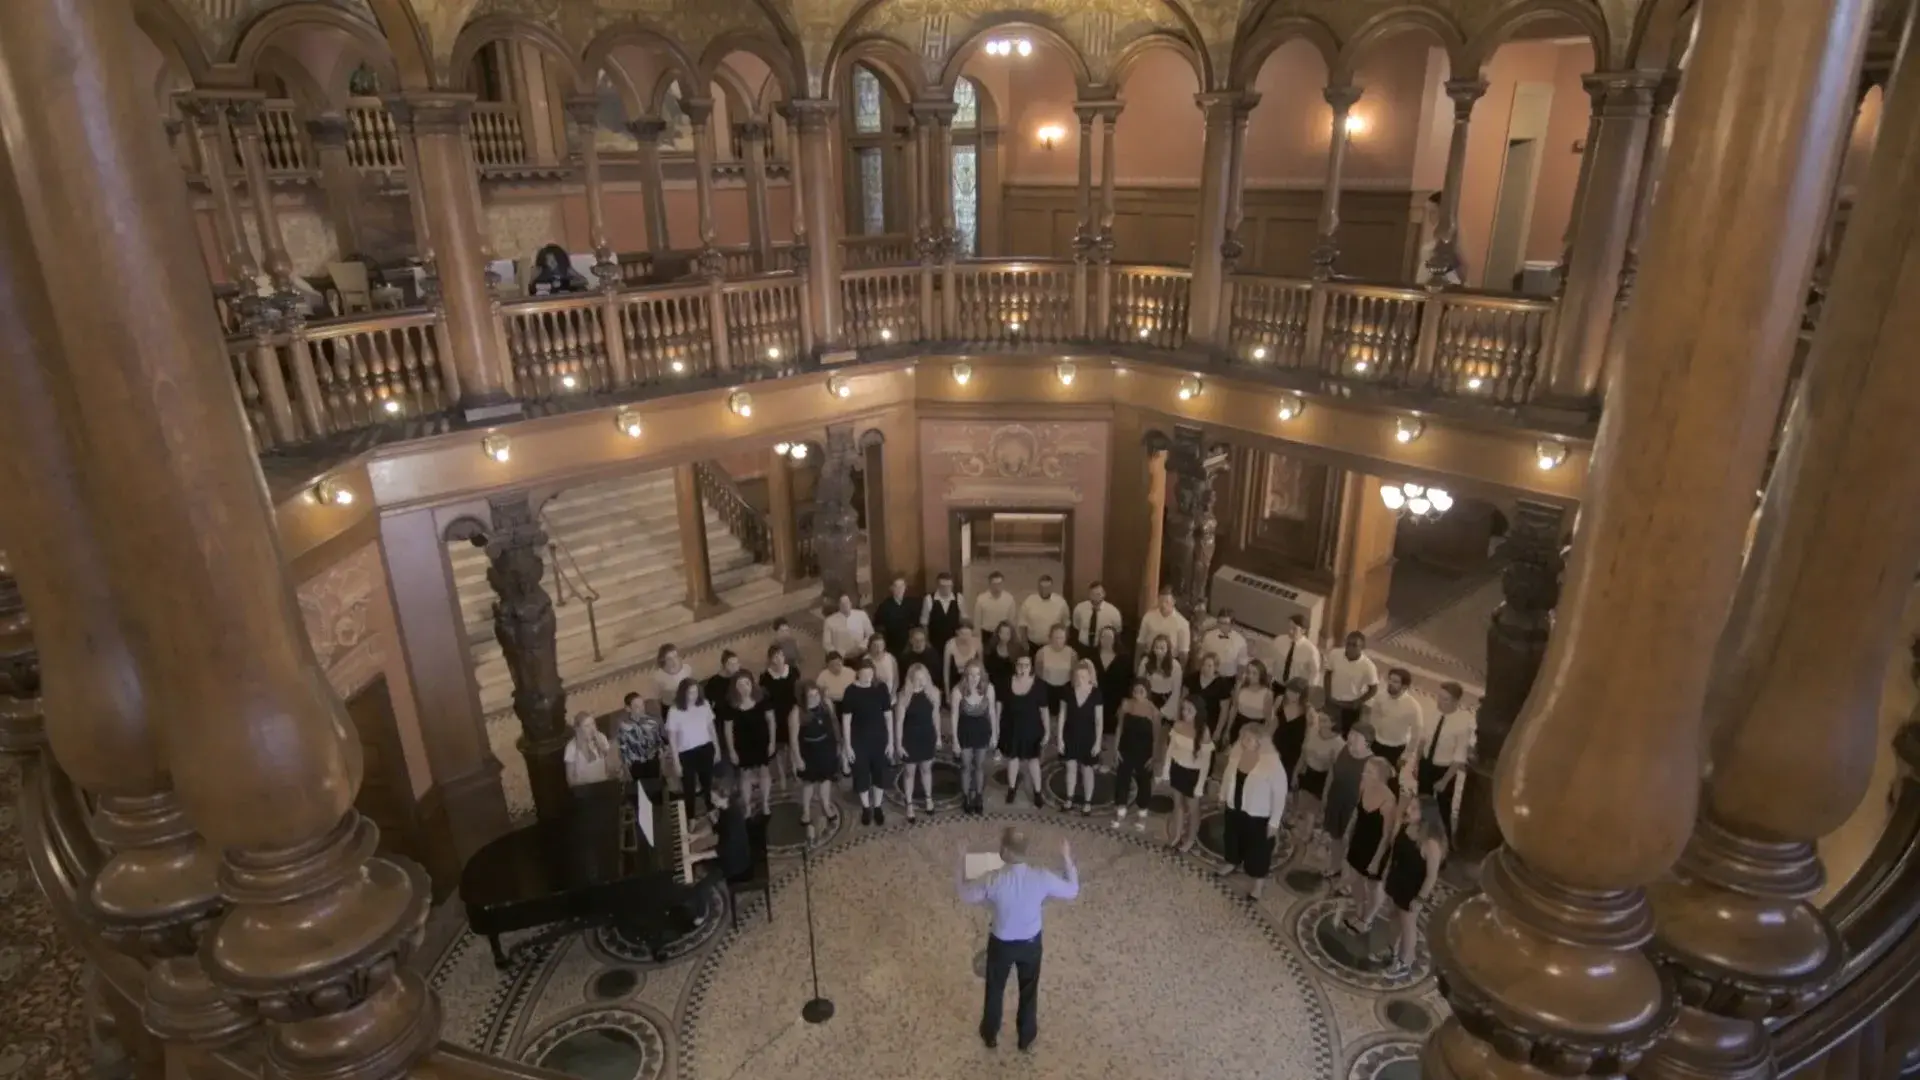 Chorus sings the Alma Mater in the Ponce Rotunda